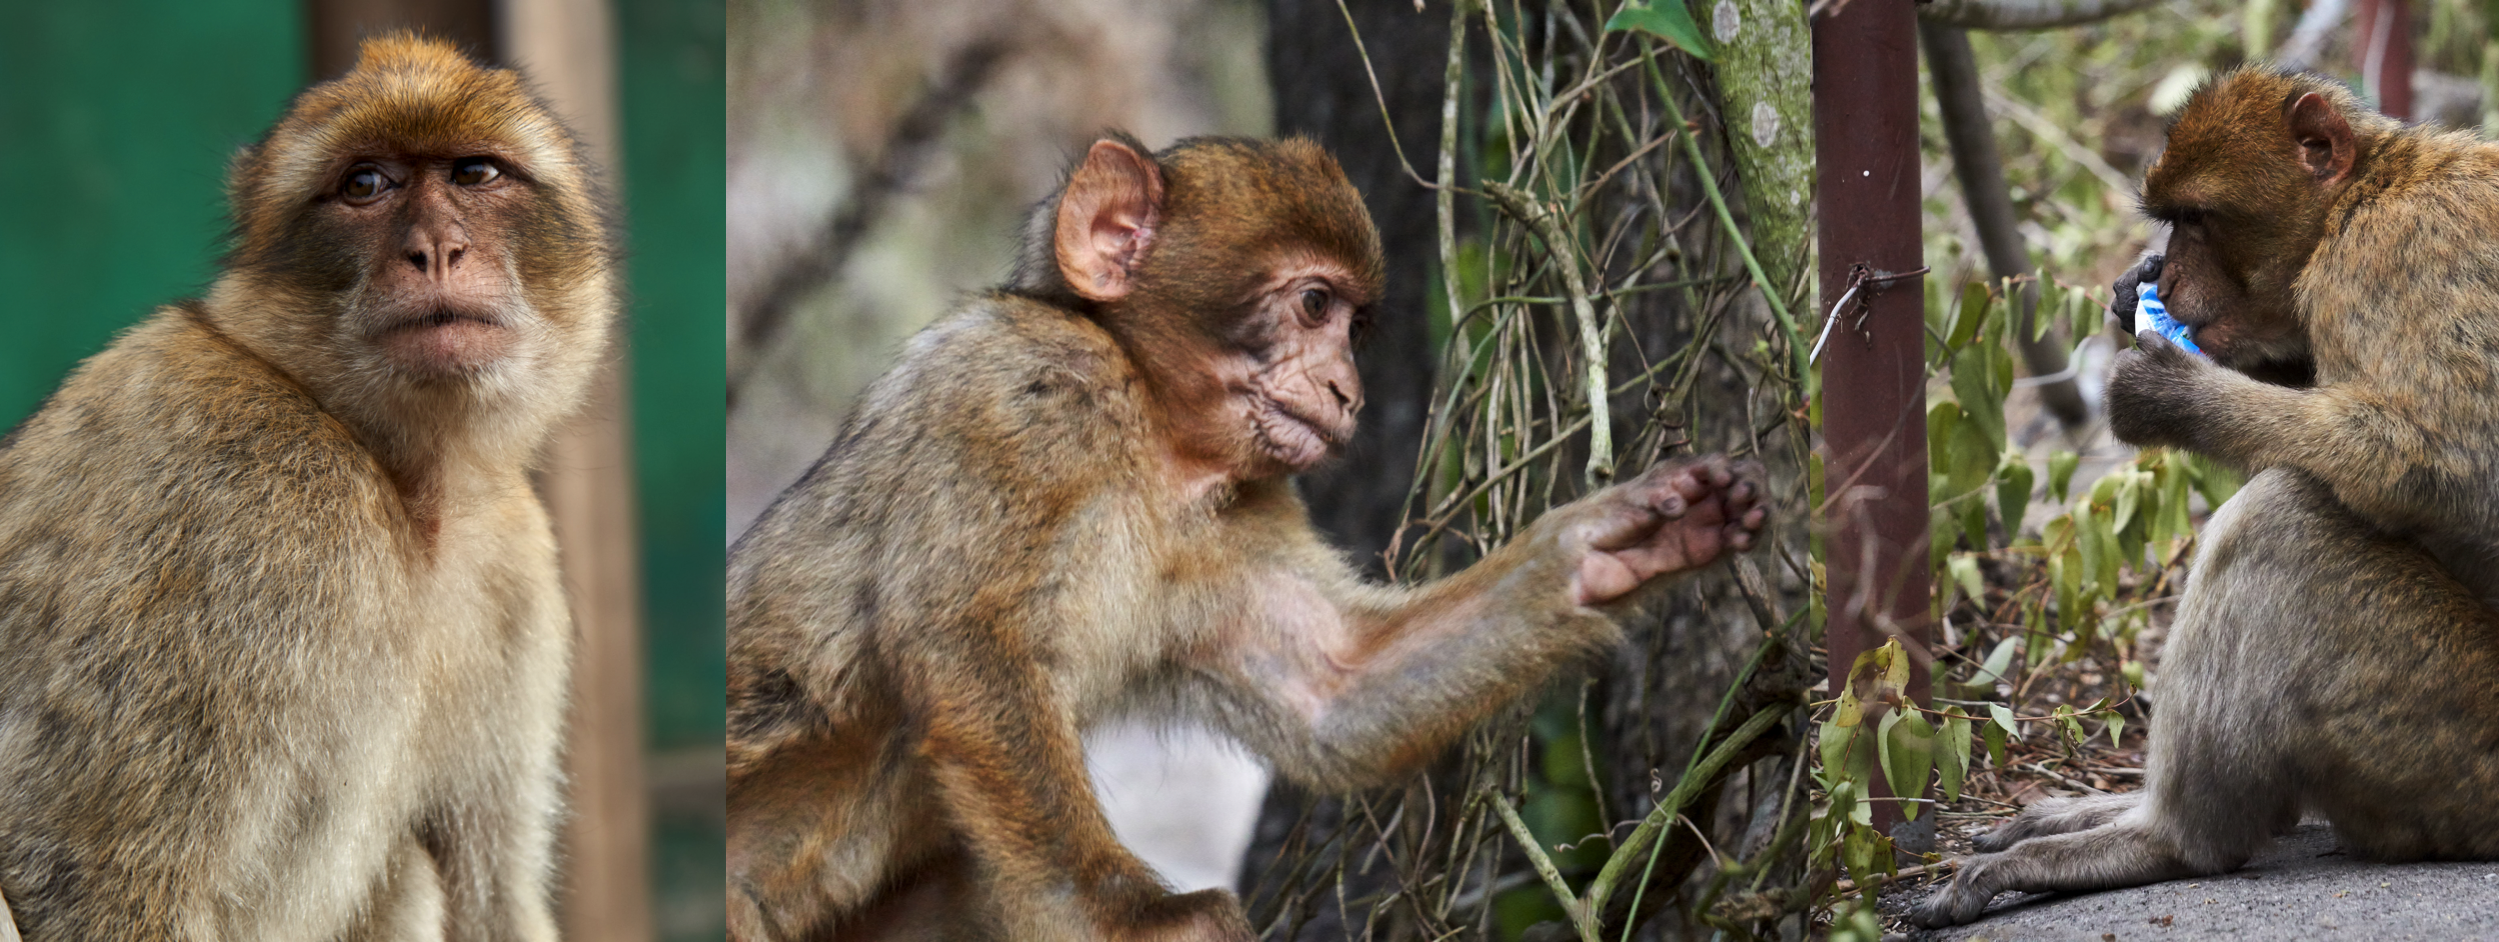 Babymonkey closeup, and a monkey chewing on plastic